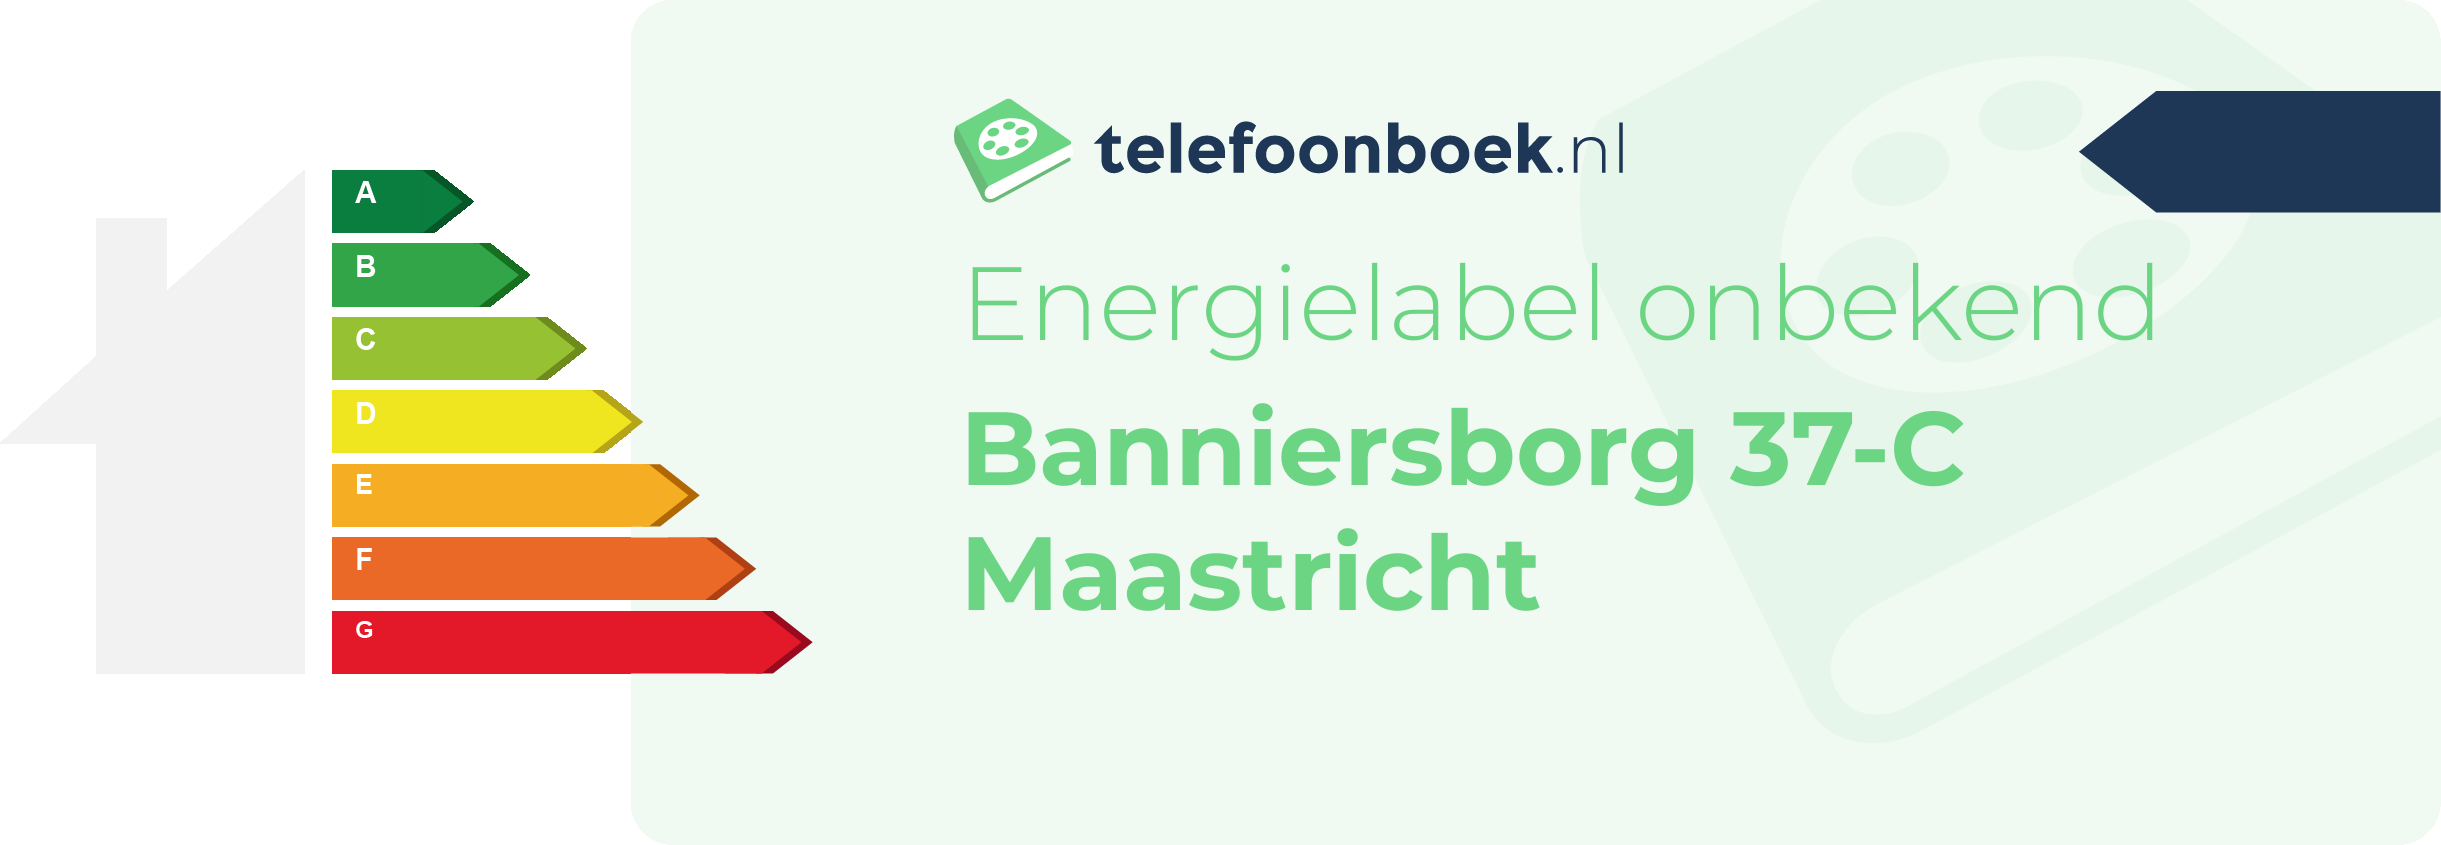 Energielabel Banniersborg 37-C Maastricht